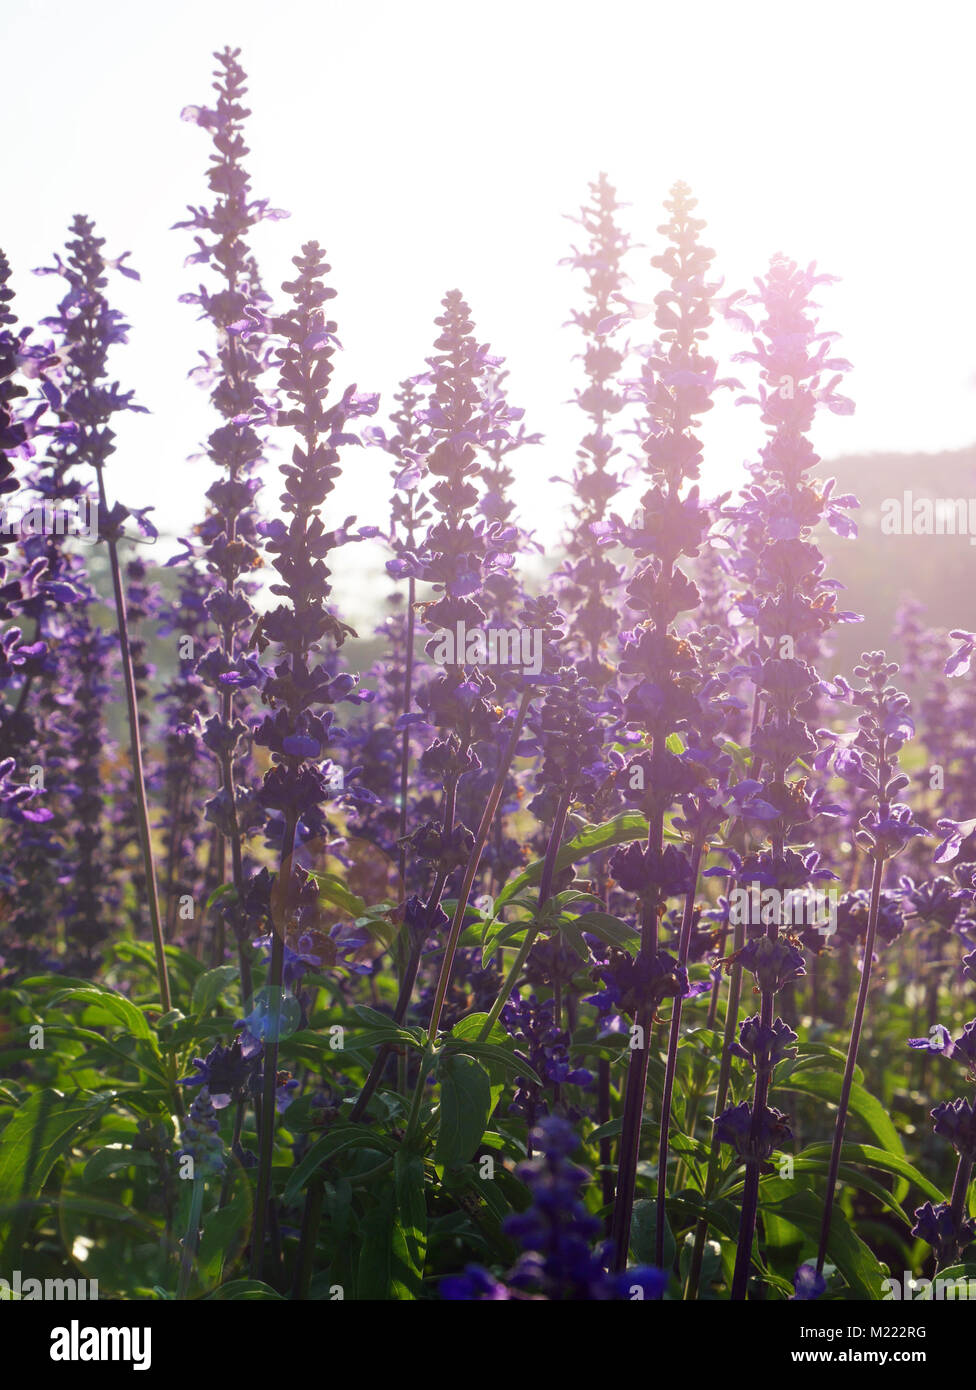 Violet salvia divinorum flowers in a field, backlited Stock Photo